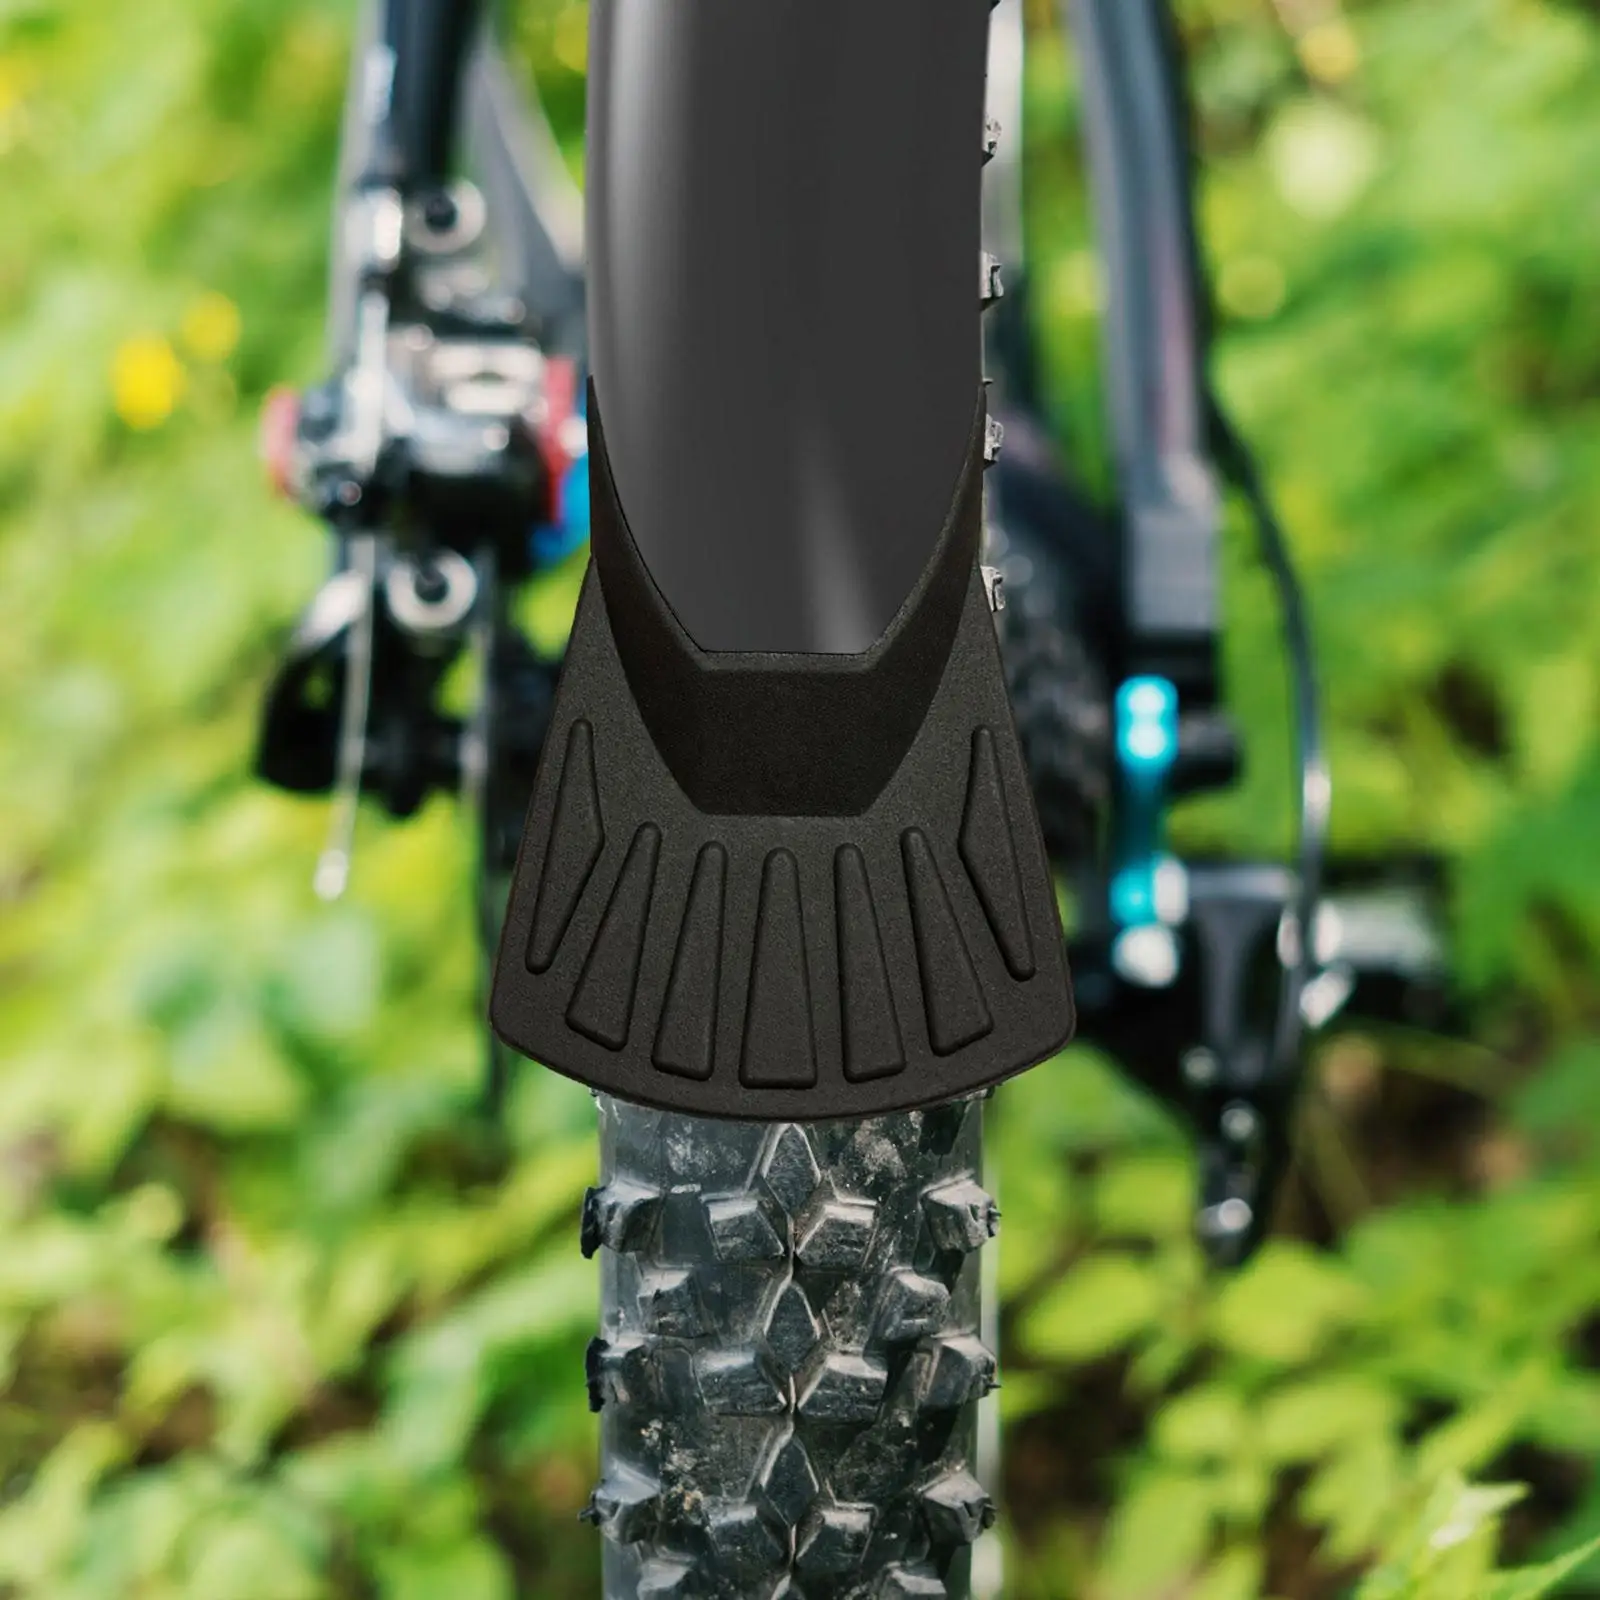 Bike Mud Fender for Road Fenders Accessories Universal Fish Tail Cover Wear-resistant Sturdy Road Bike Part Bikes Mud Flap